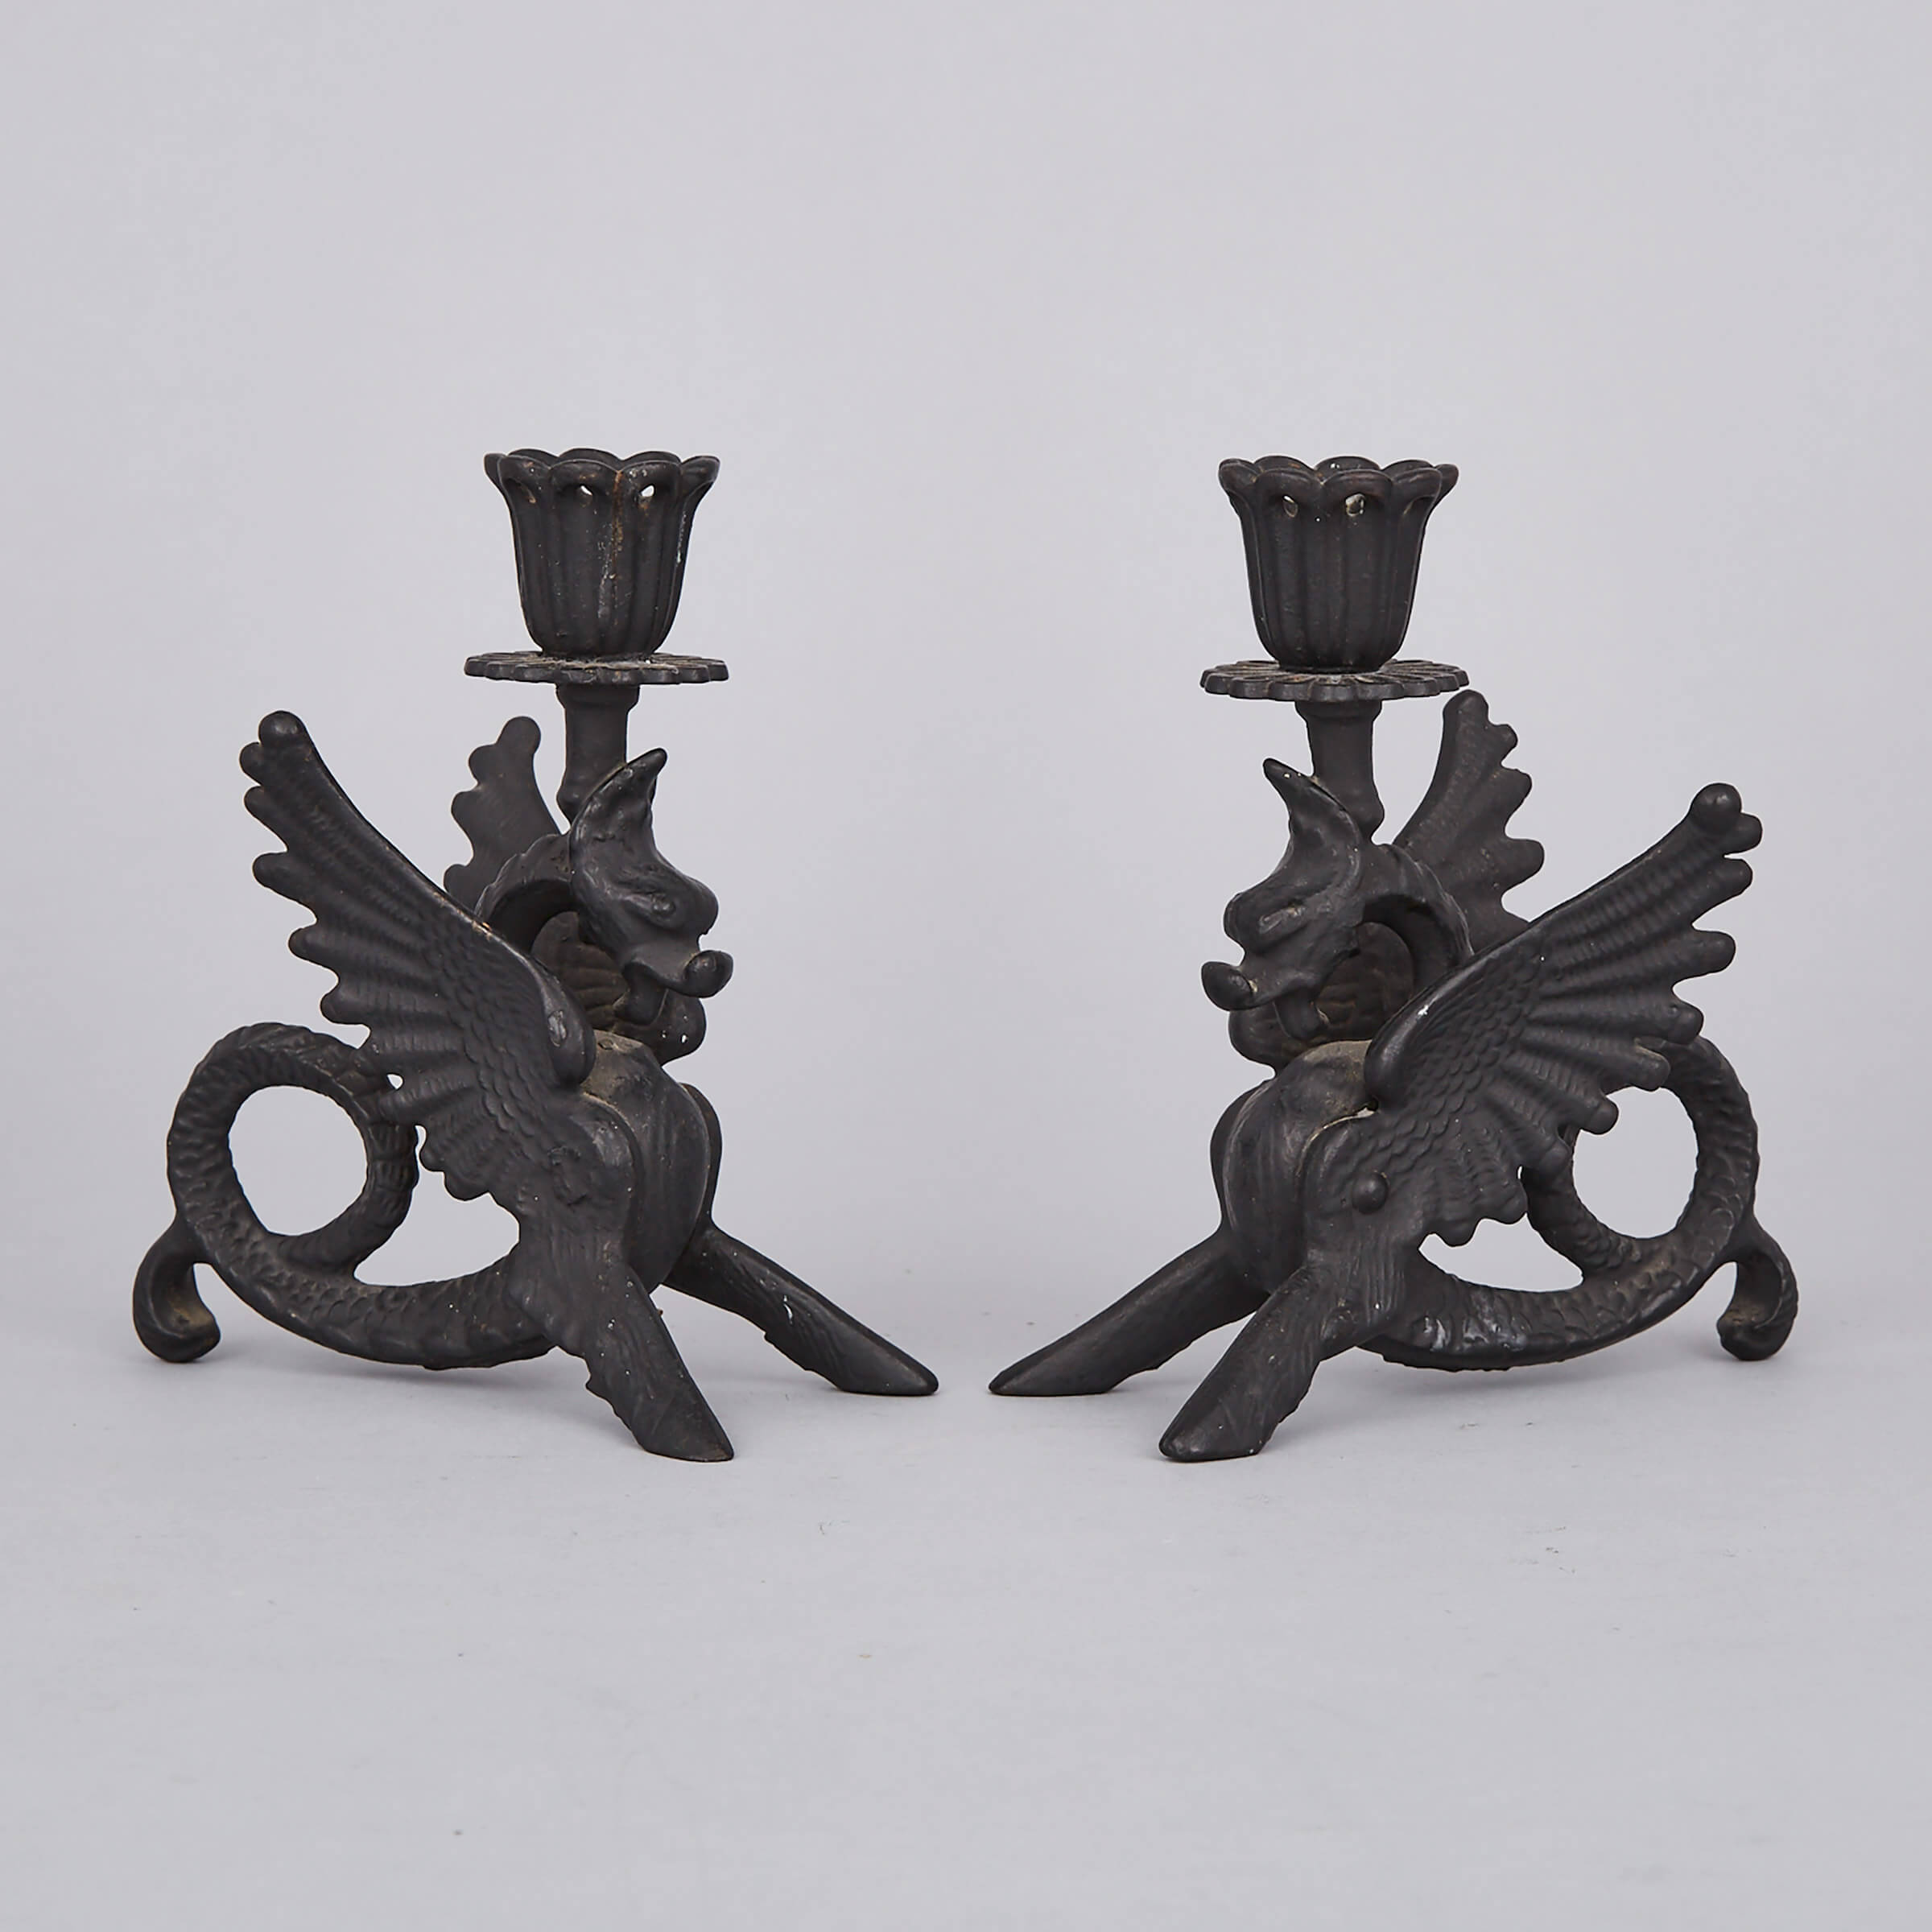 Pair of Renaissance Revival Cast Iron Gryphon Form Candlesticks, 20th century